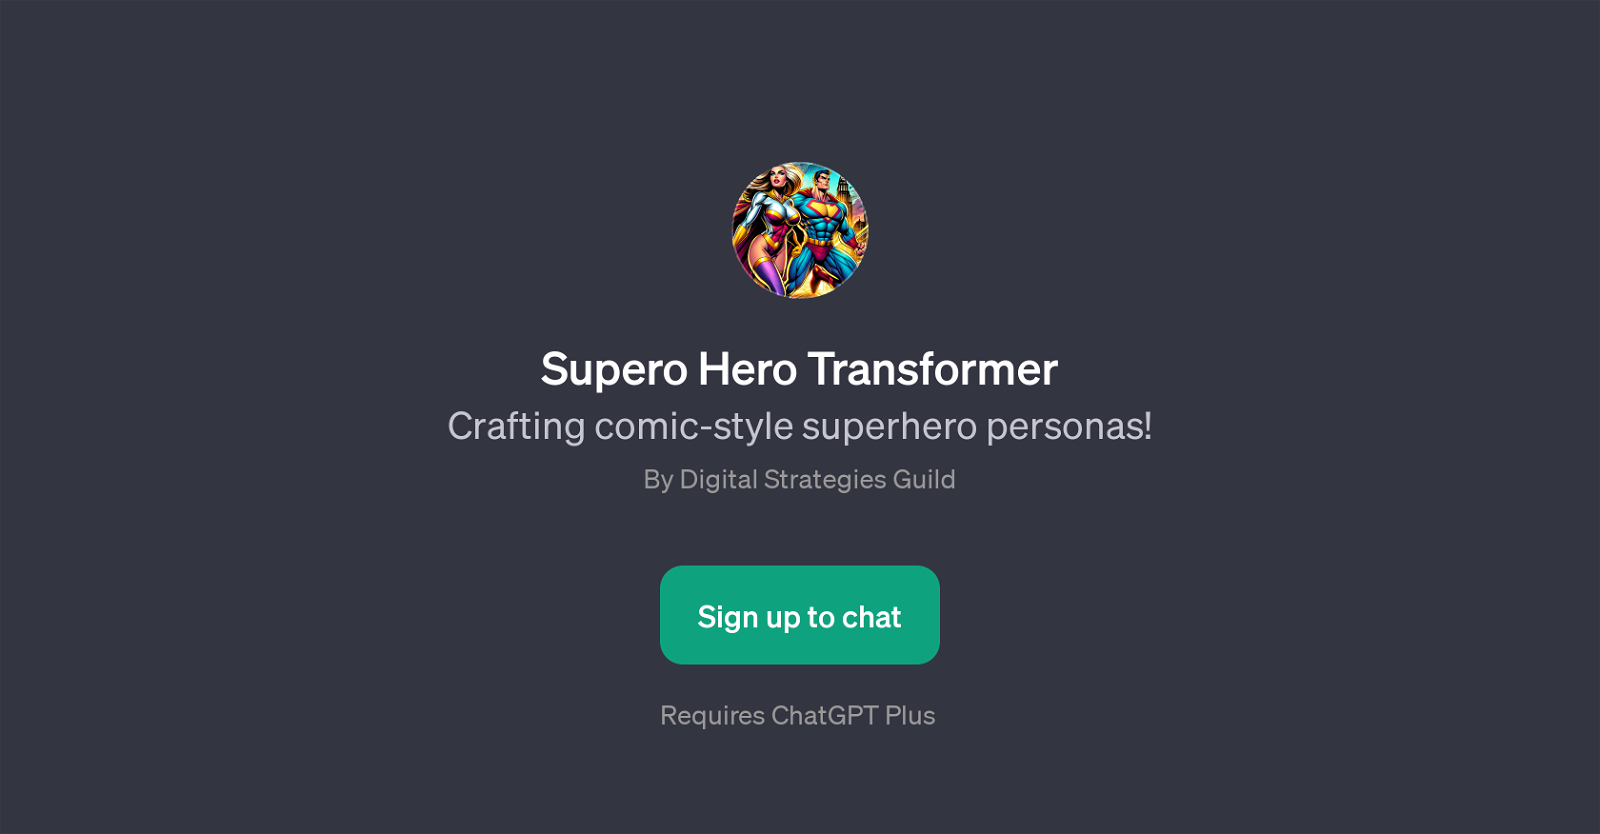 Supero Hero Transformer website